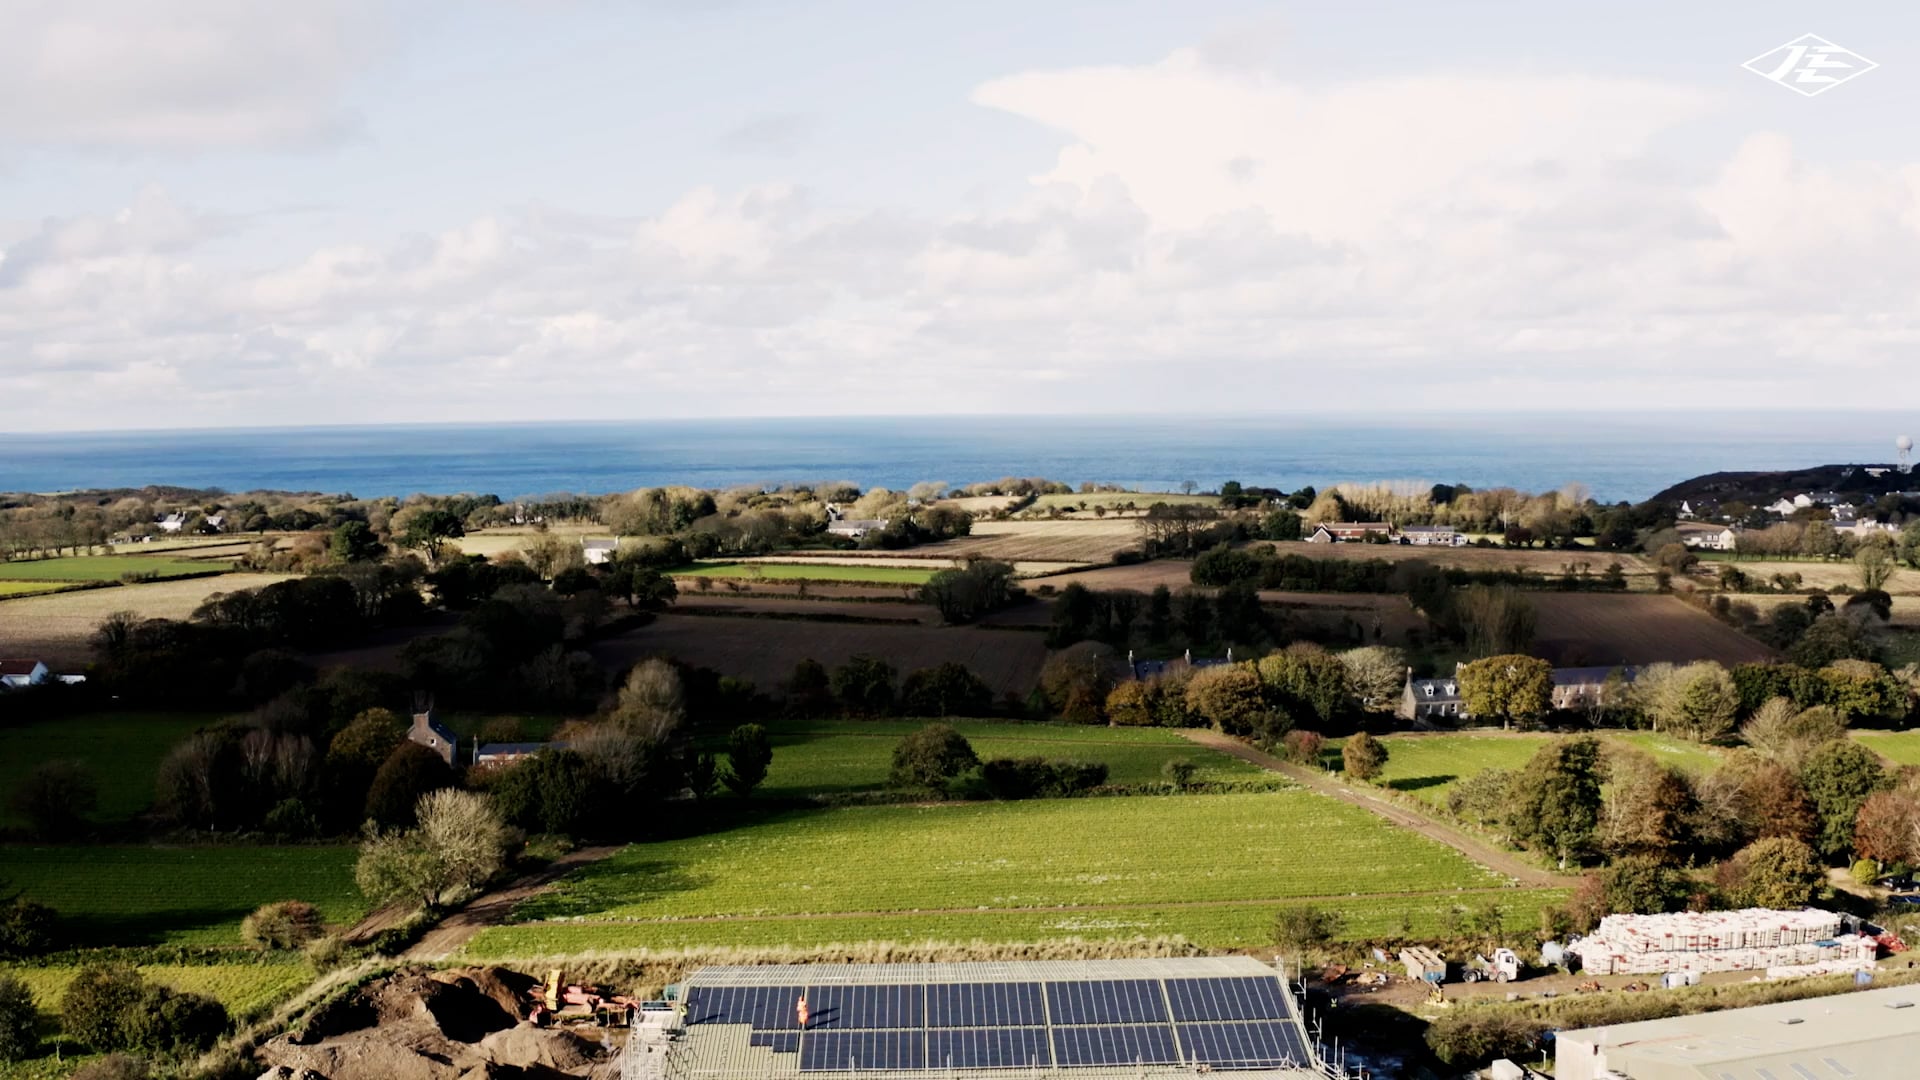 Jersey Dairy solar array